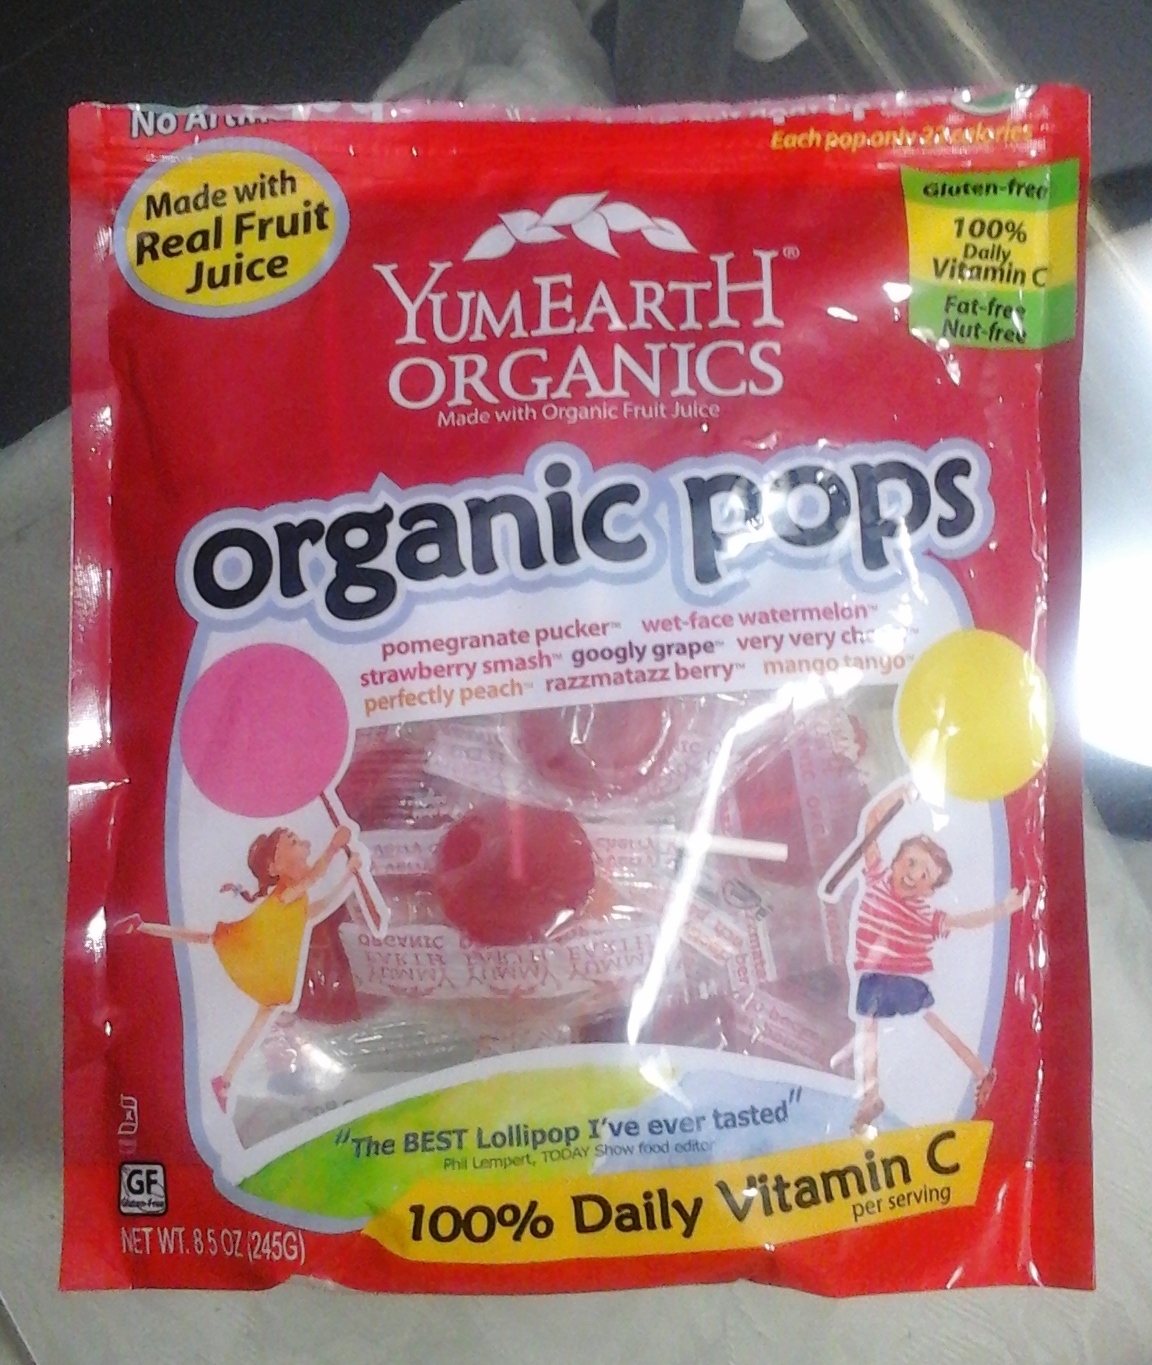 YumEarth Organics - Organic Pops.jpg